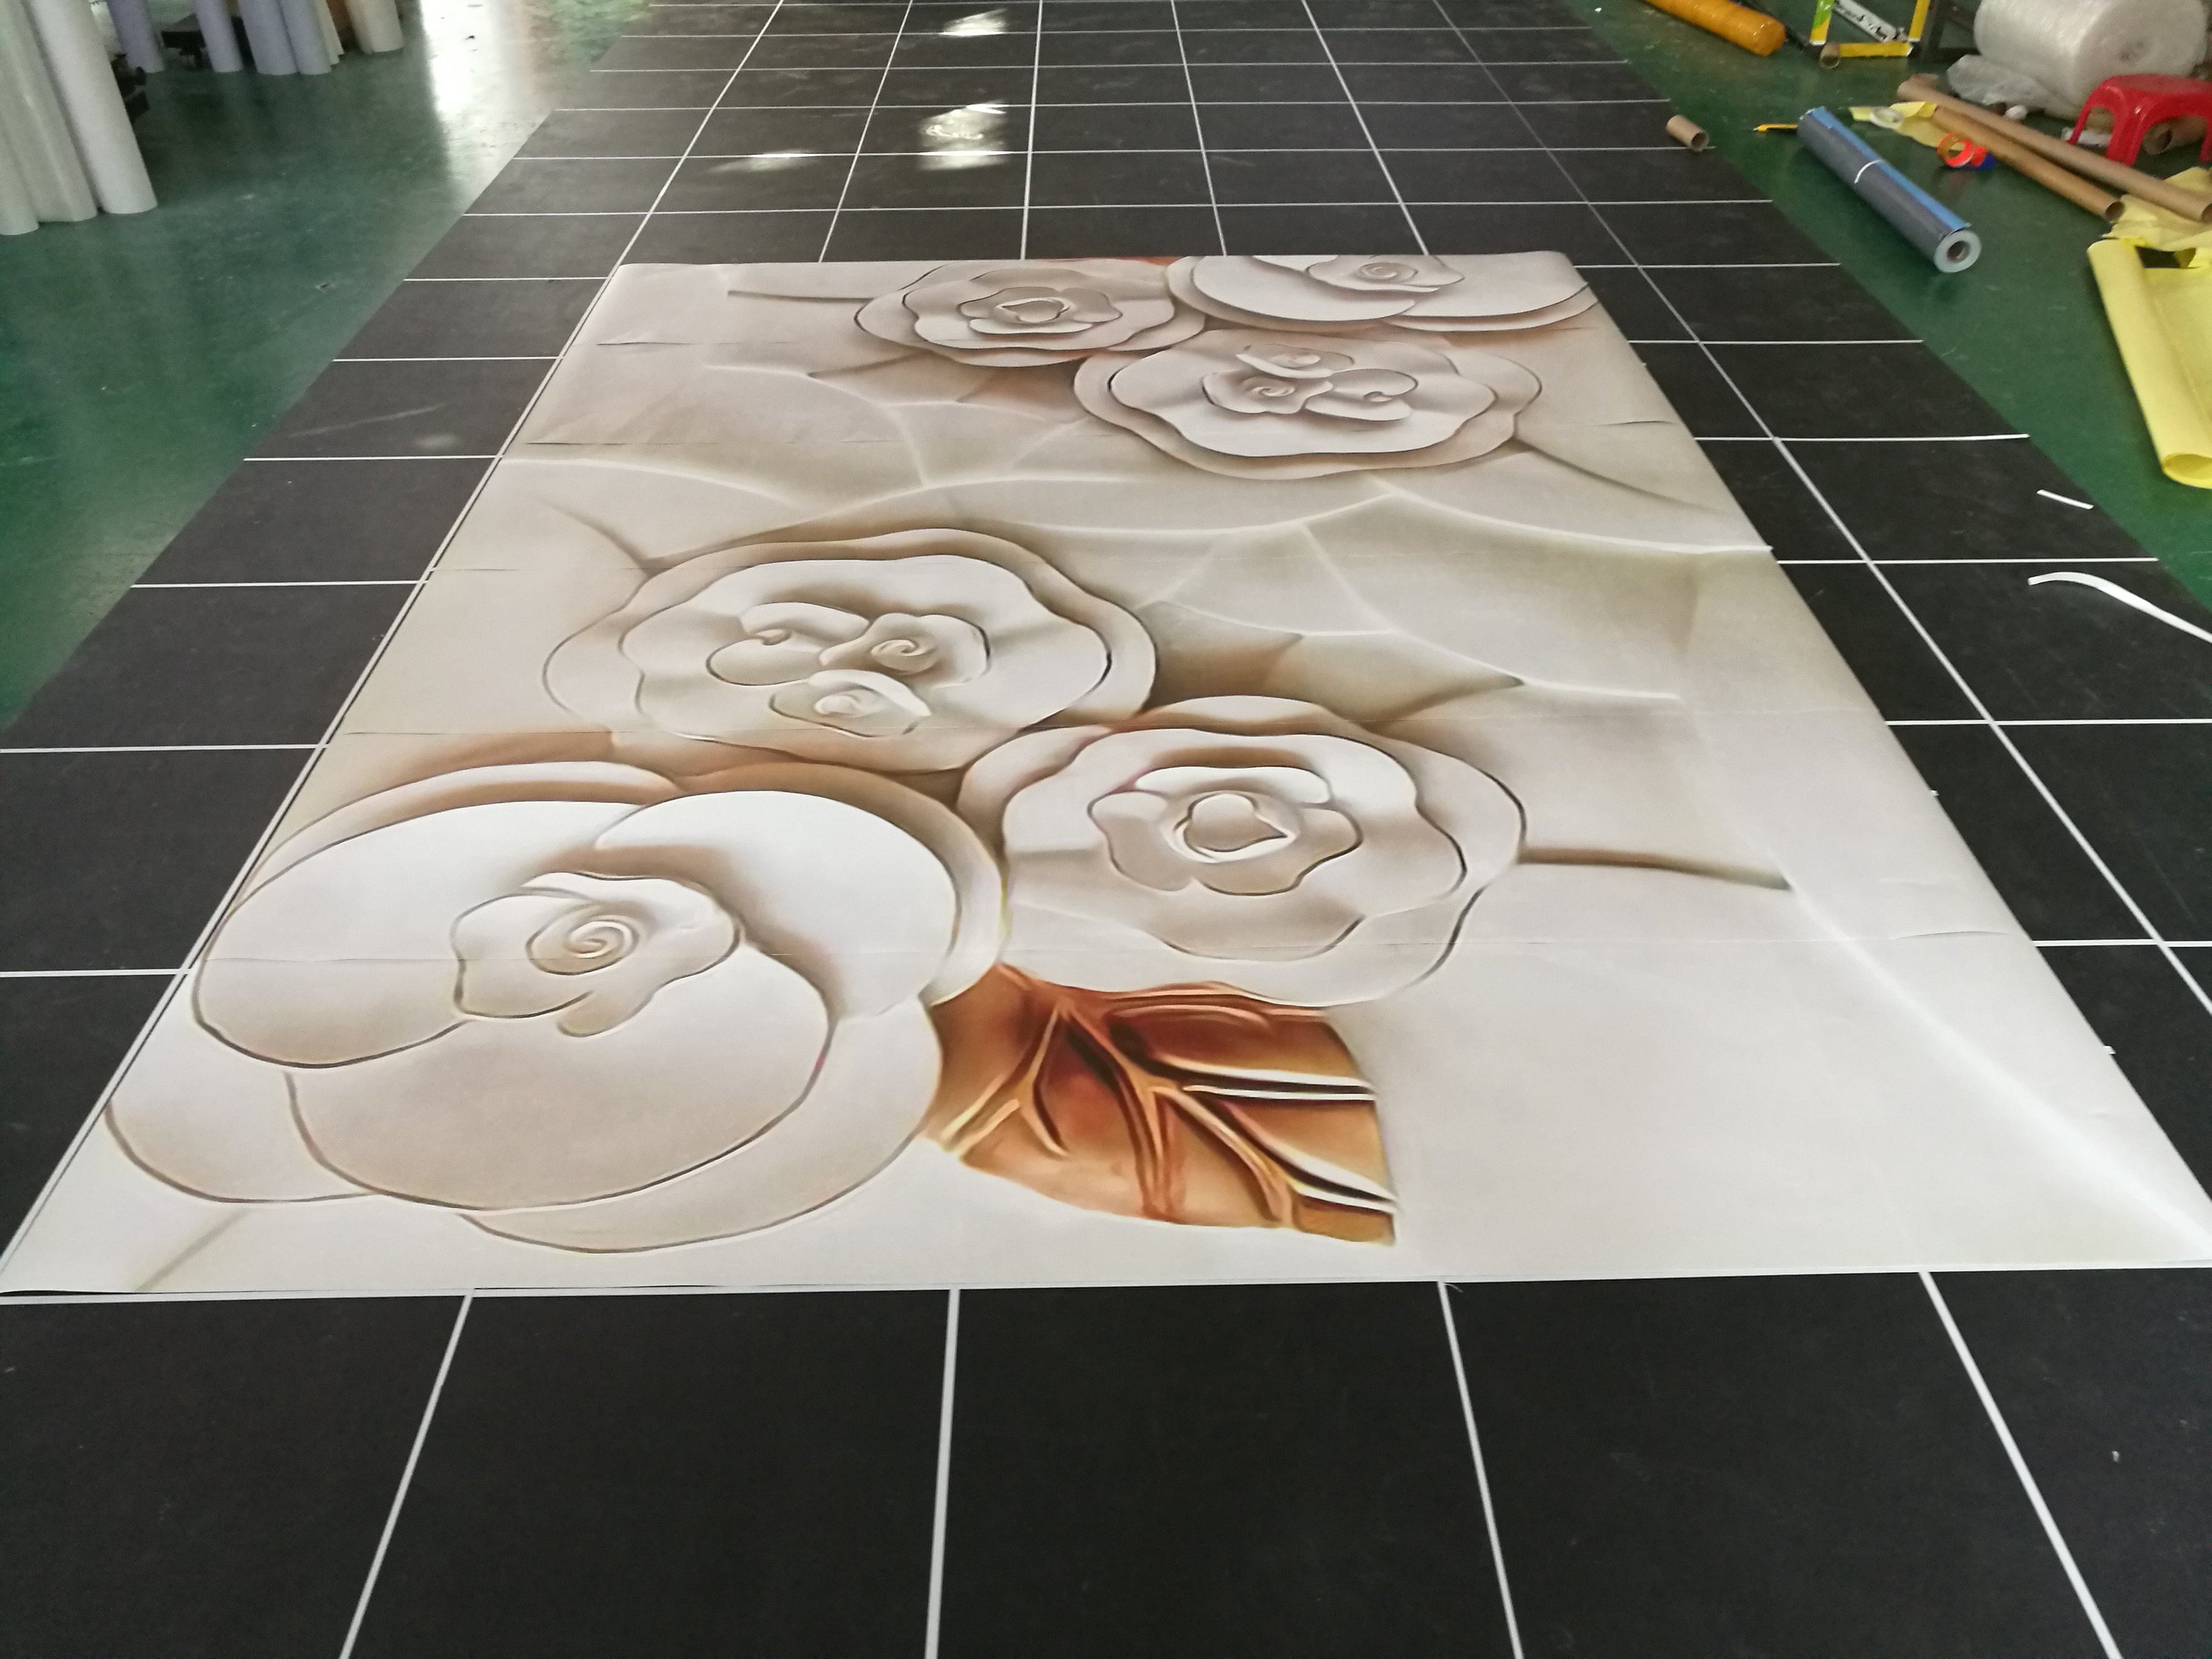 White 3D Flowers Wallpaper AJ Wallpapers 